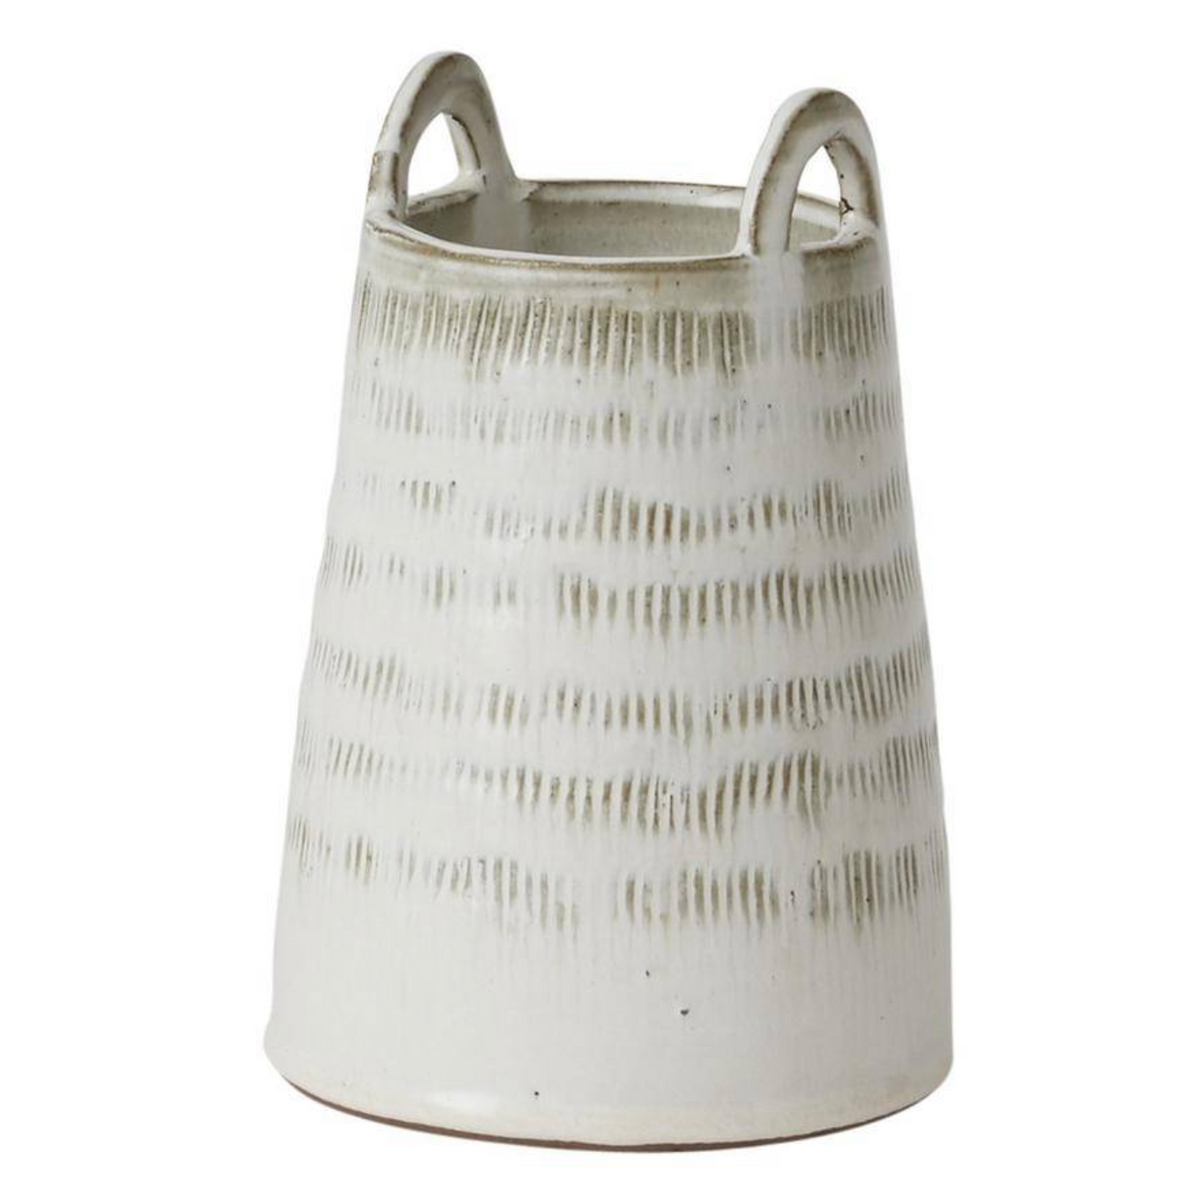 Mia Handled Ceramic Vase - Small - Holistic Habitat 